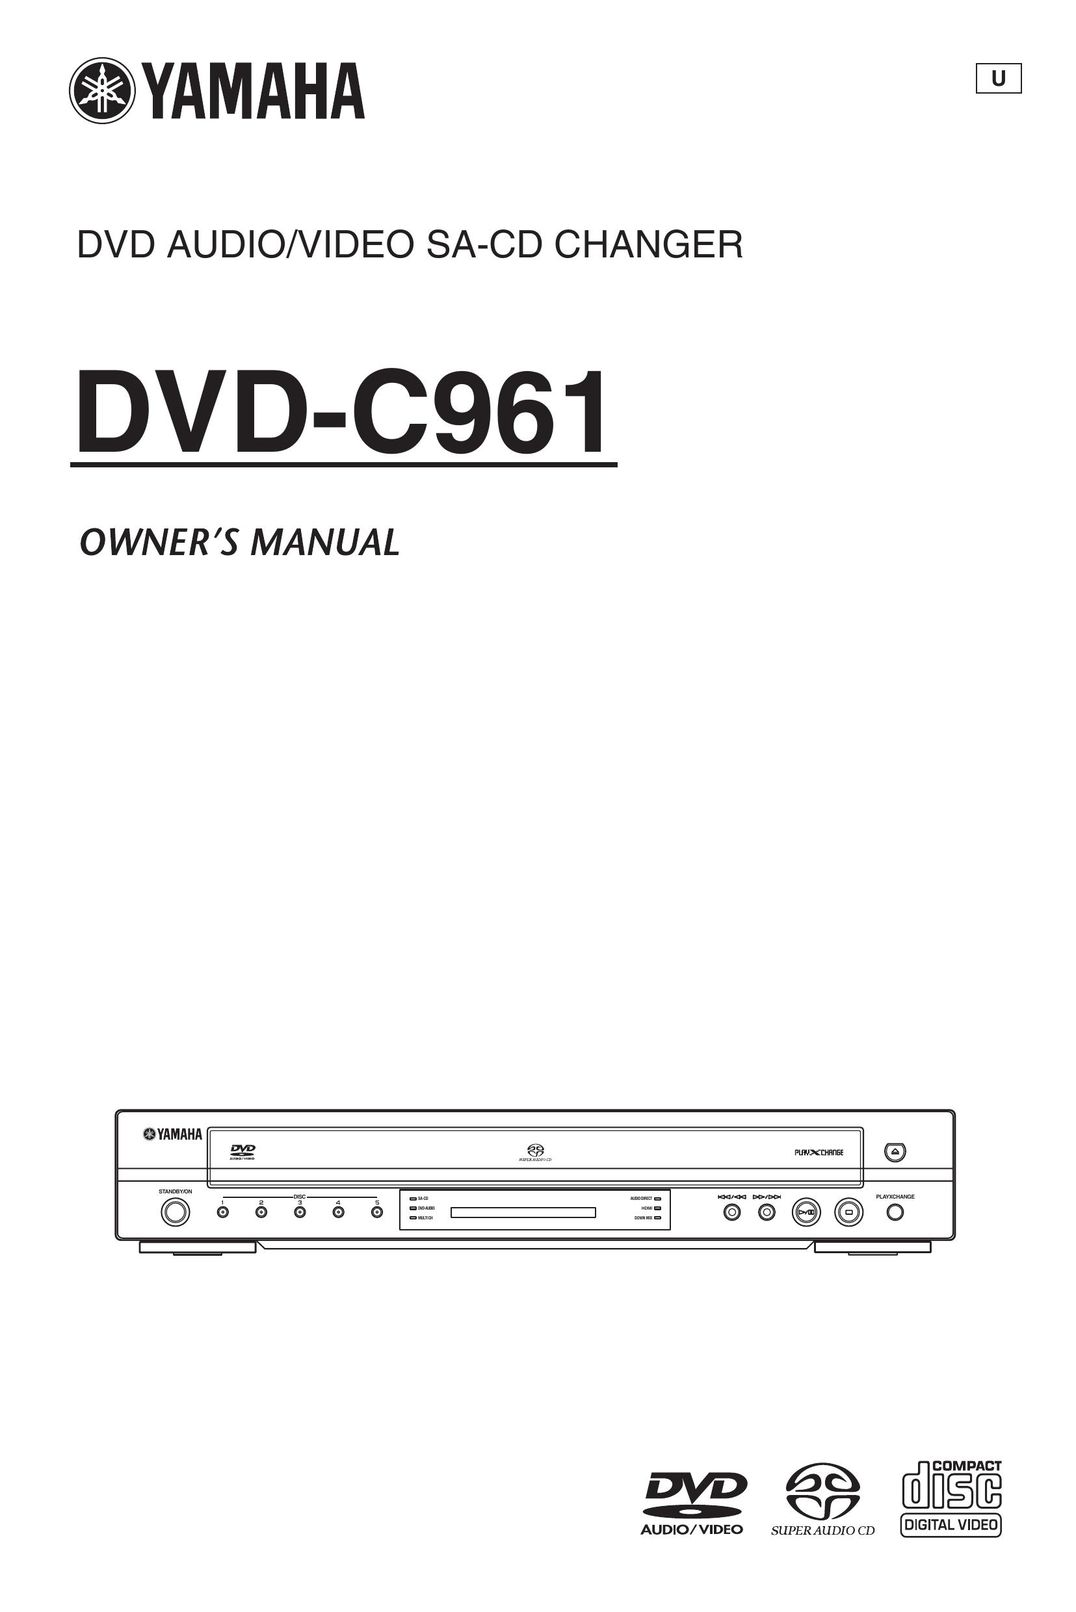 Yamaha DVD-C961 Portable DVD Player User Manual